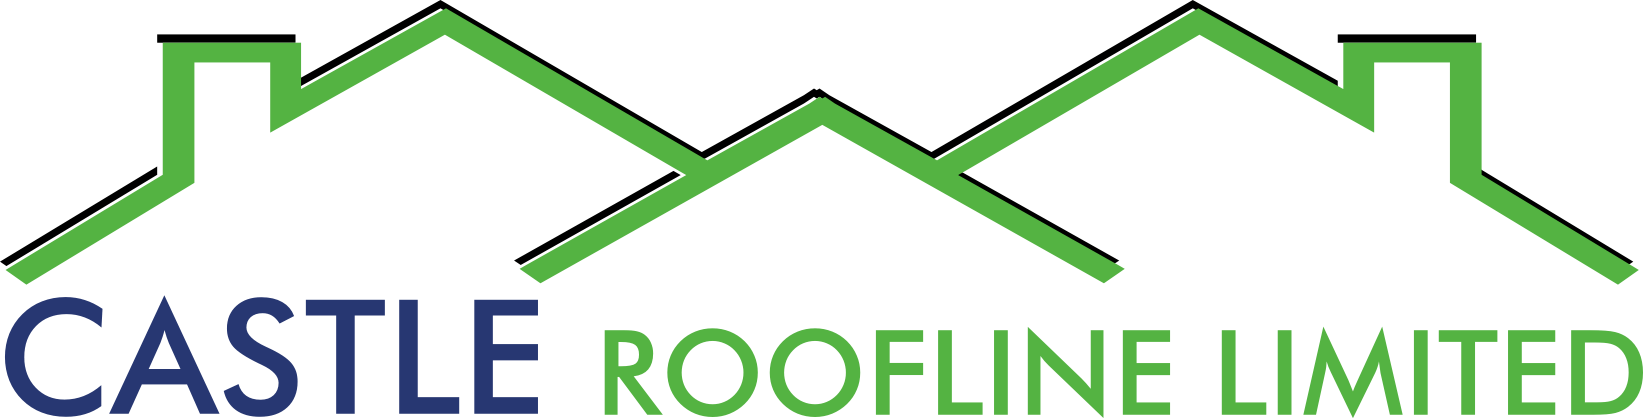 Roof Line Logo - www.castlerooflinelimited.co.uk - HOME